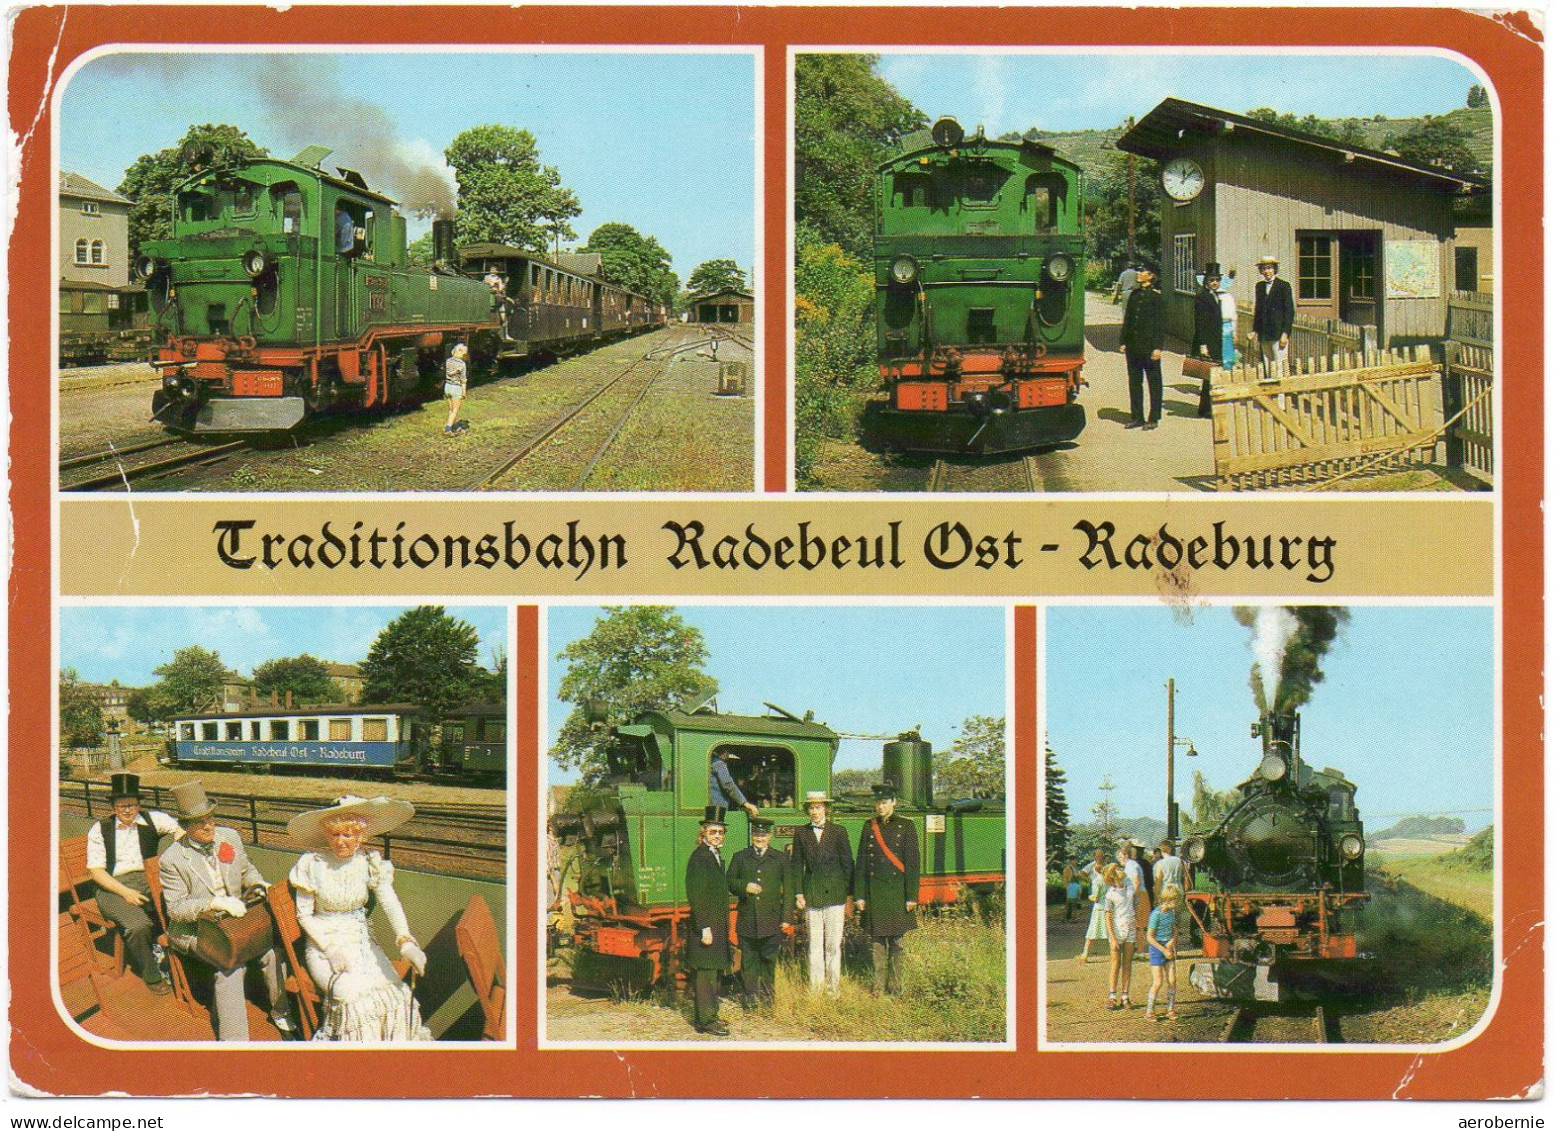 Traditionsbahn Radebeul Ost - Radeburg - Trains